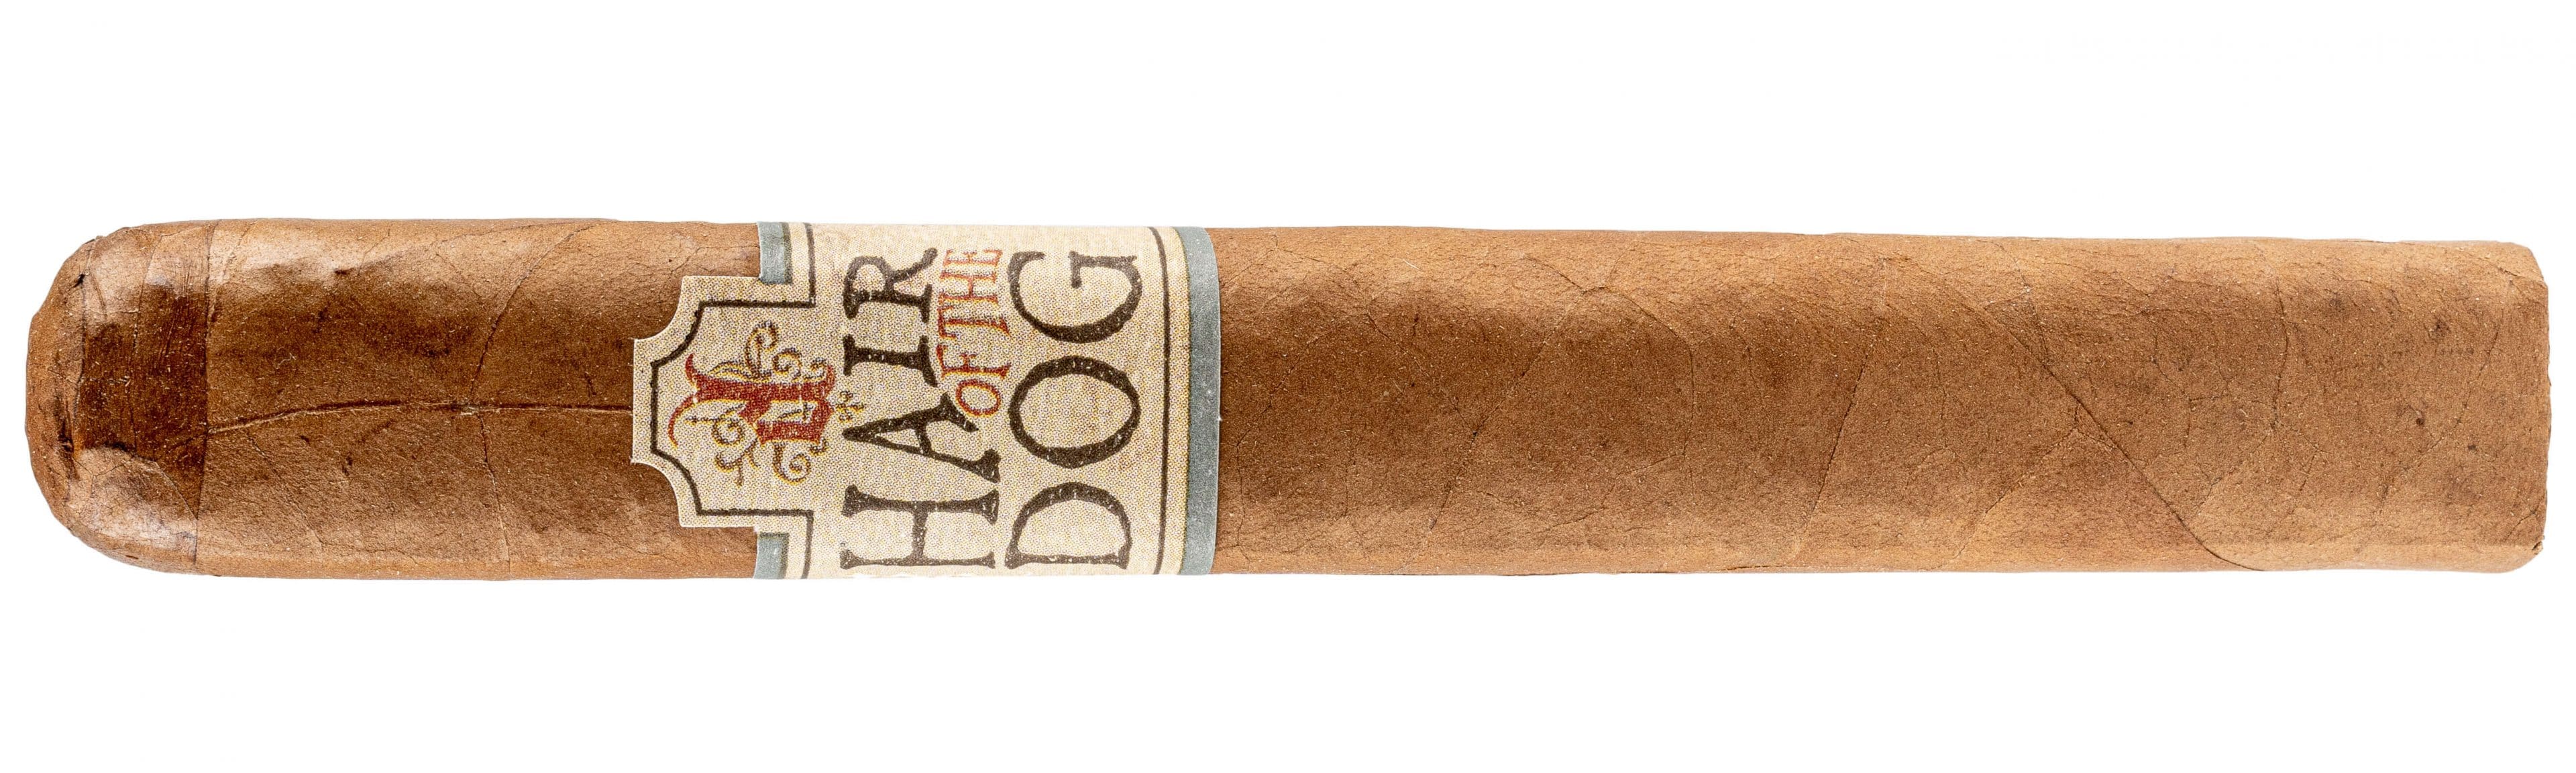 Blind Cigar Review: Diesel | Hair of the Dog Toro